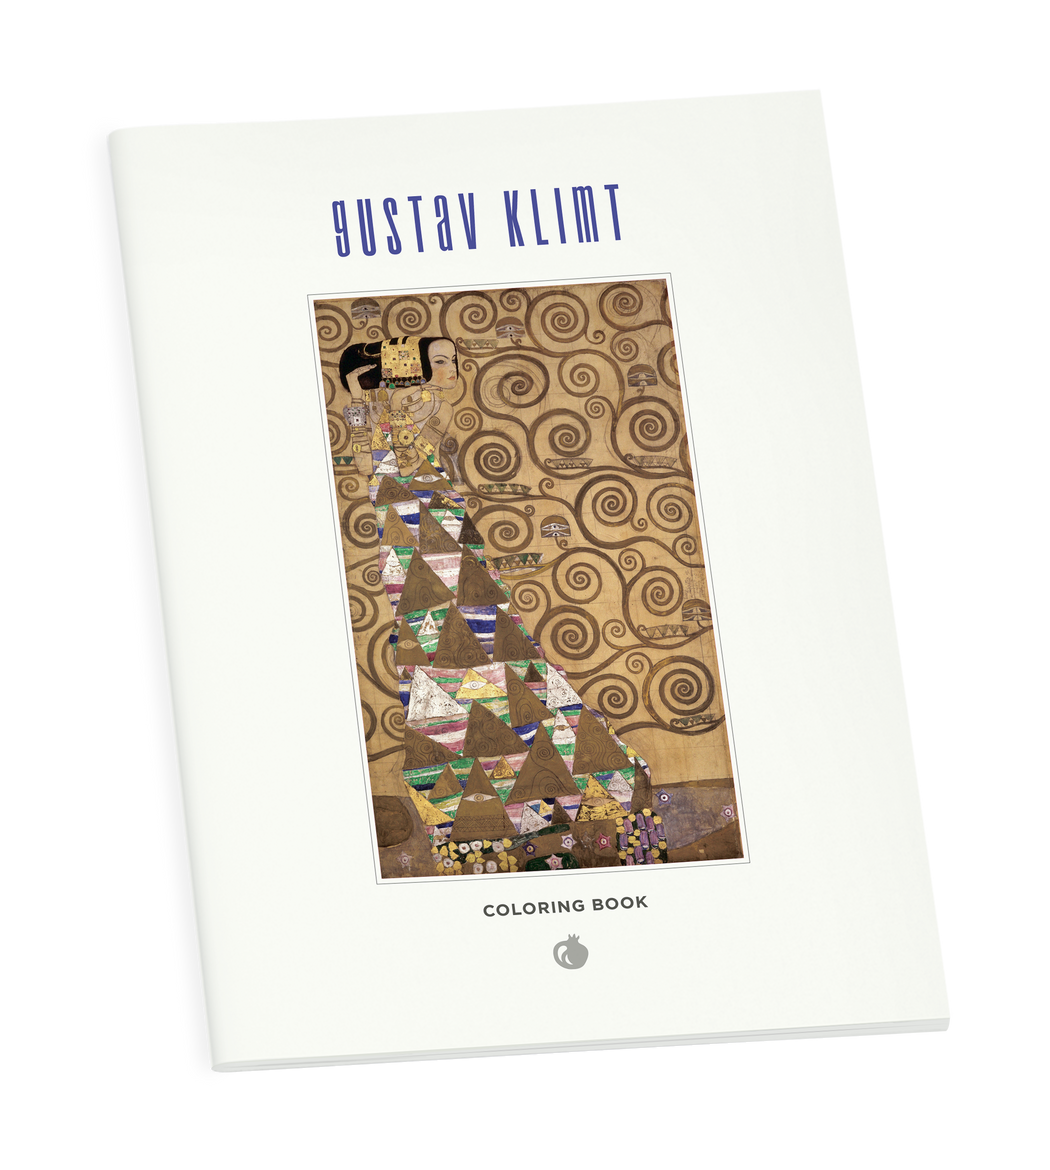 Gustav Klimt Coloring Book_Primary